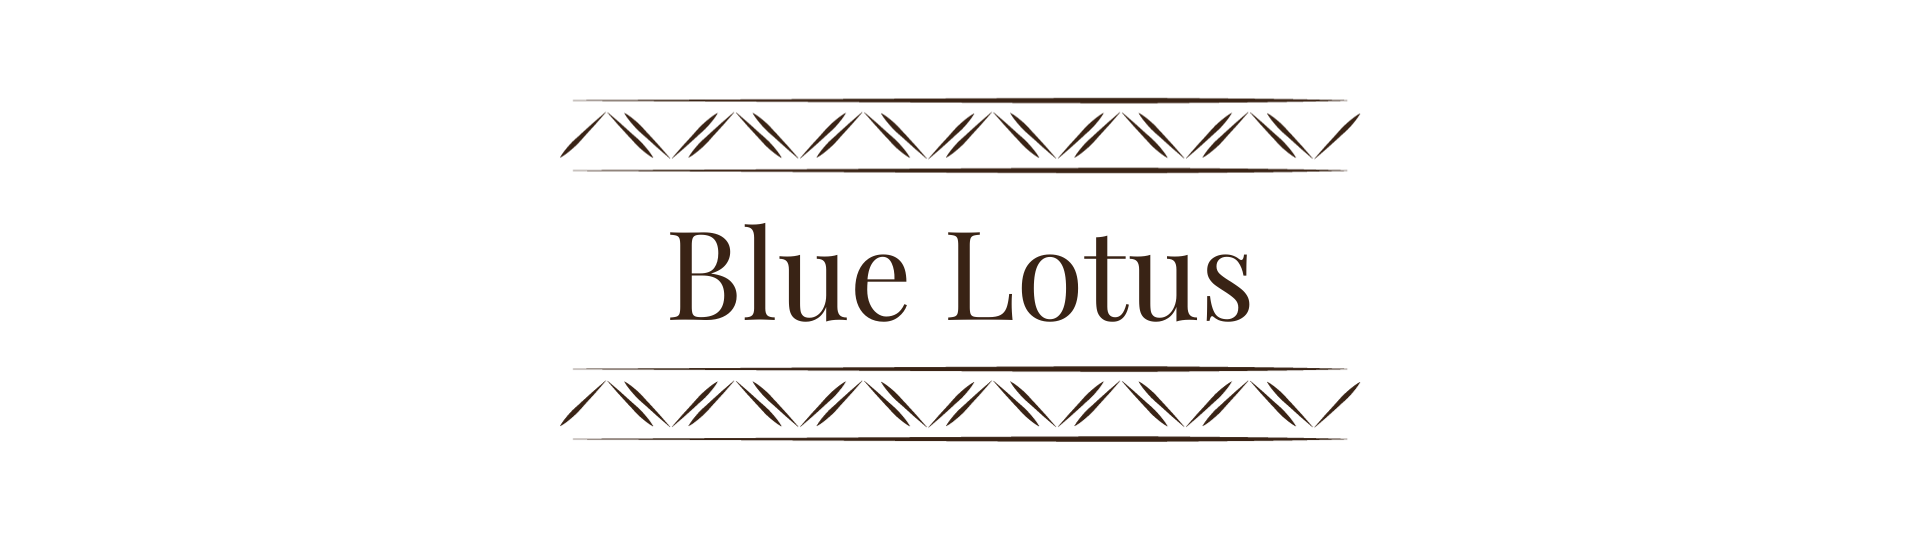 Blue Lotus by MOOJO